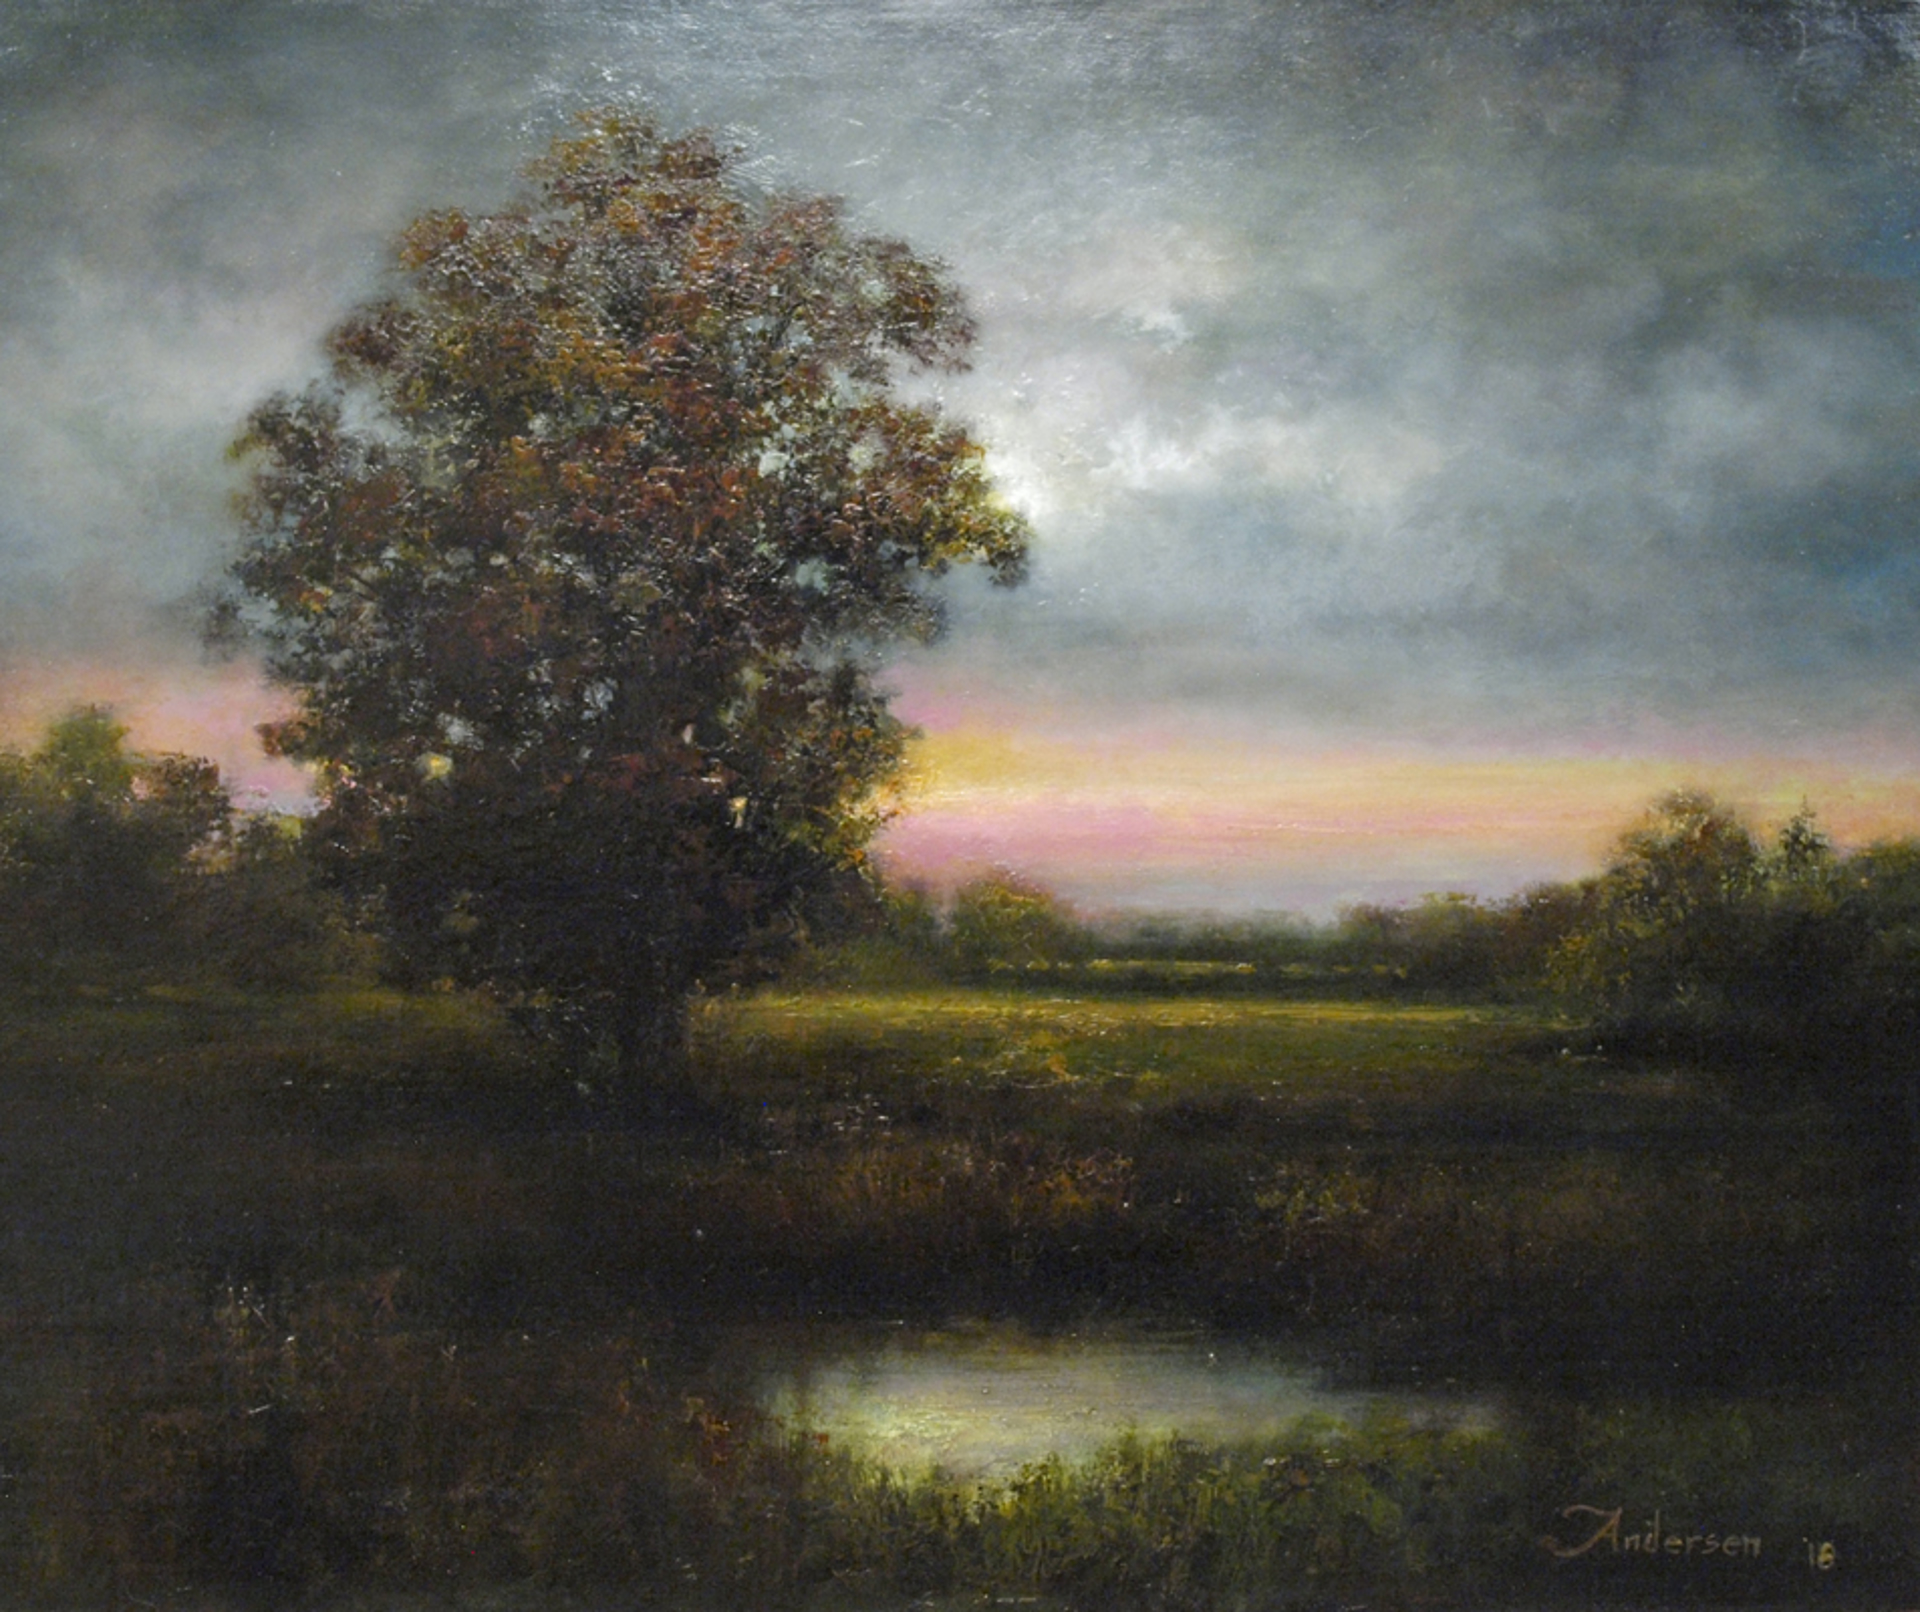 Autumn Evening by John Andersen